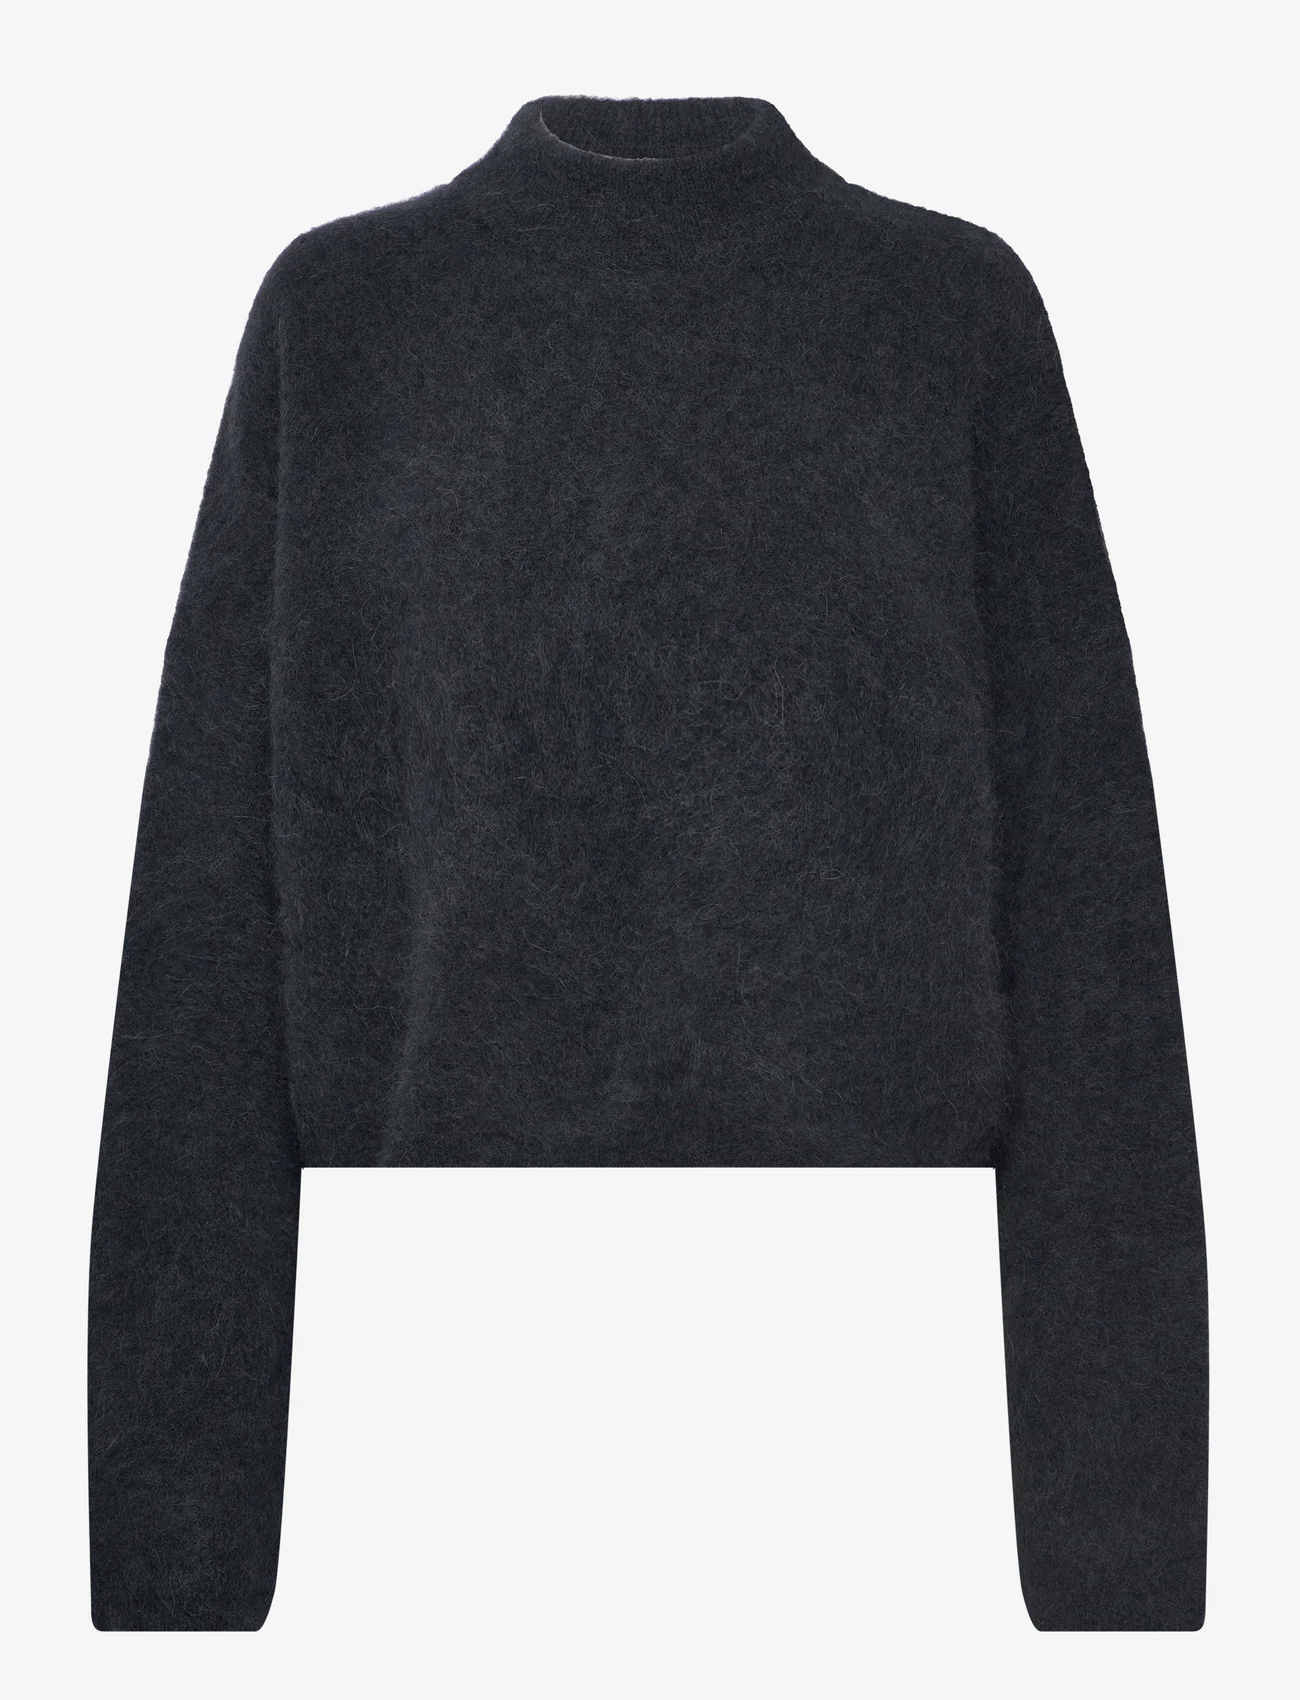 Hope - Boxy Alpaca Sweater - džemprid - washed black - 0